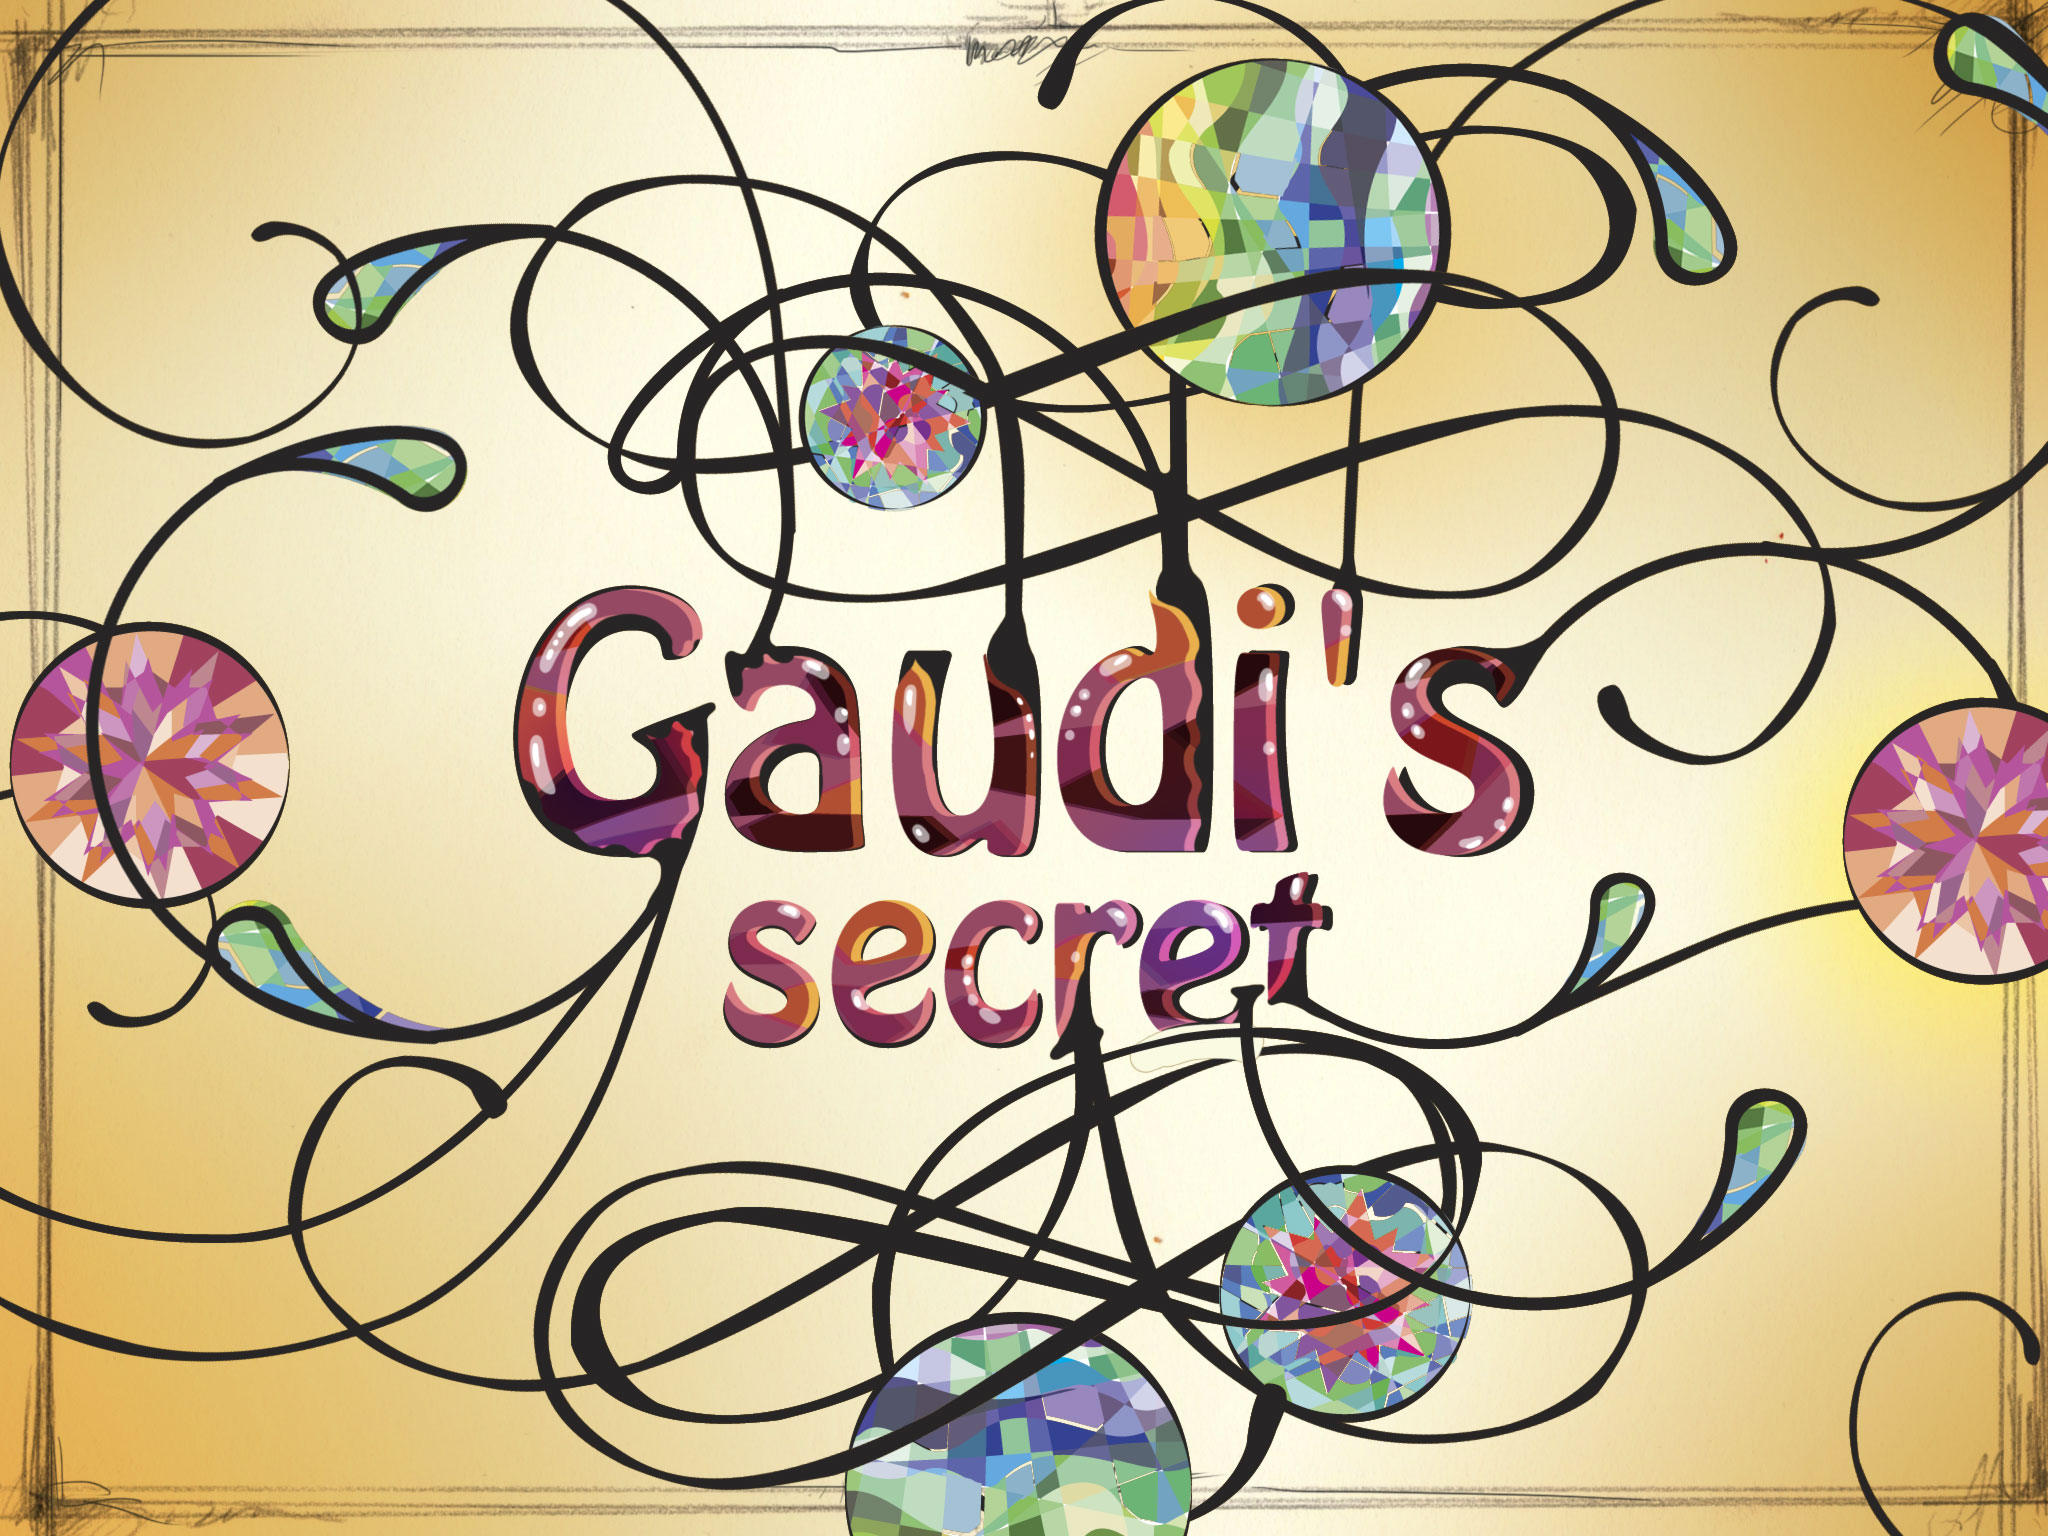 App: Gaudi’s secret